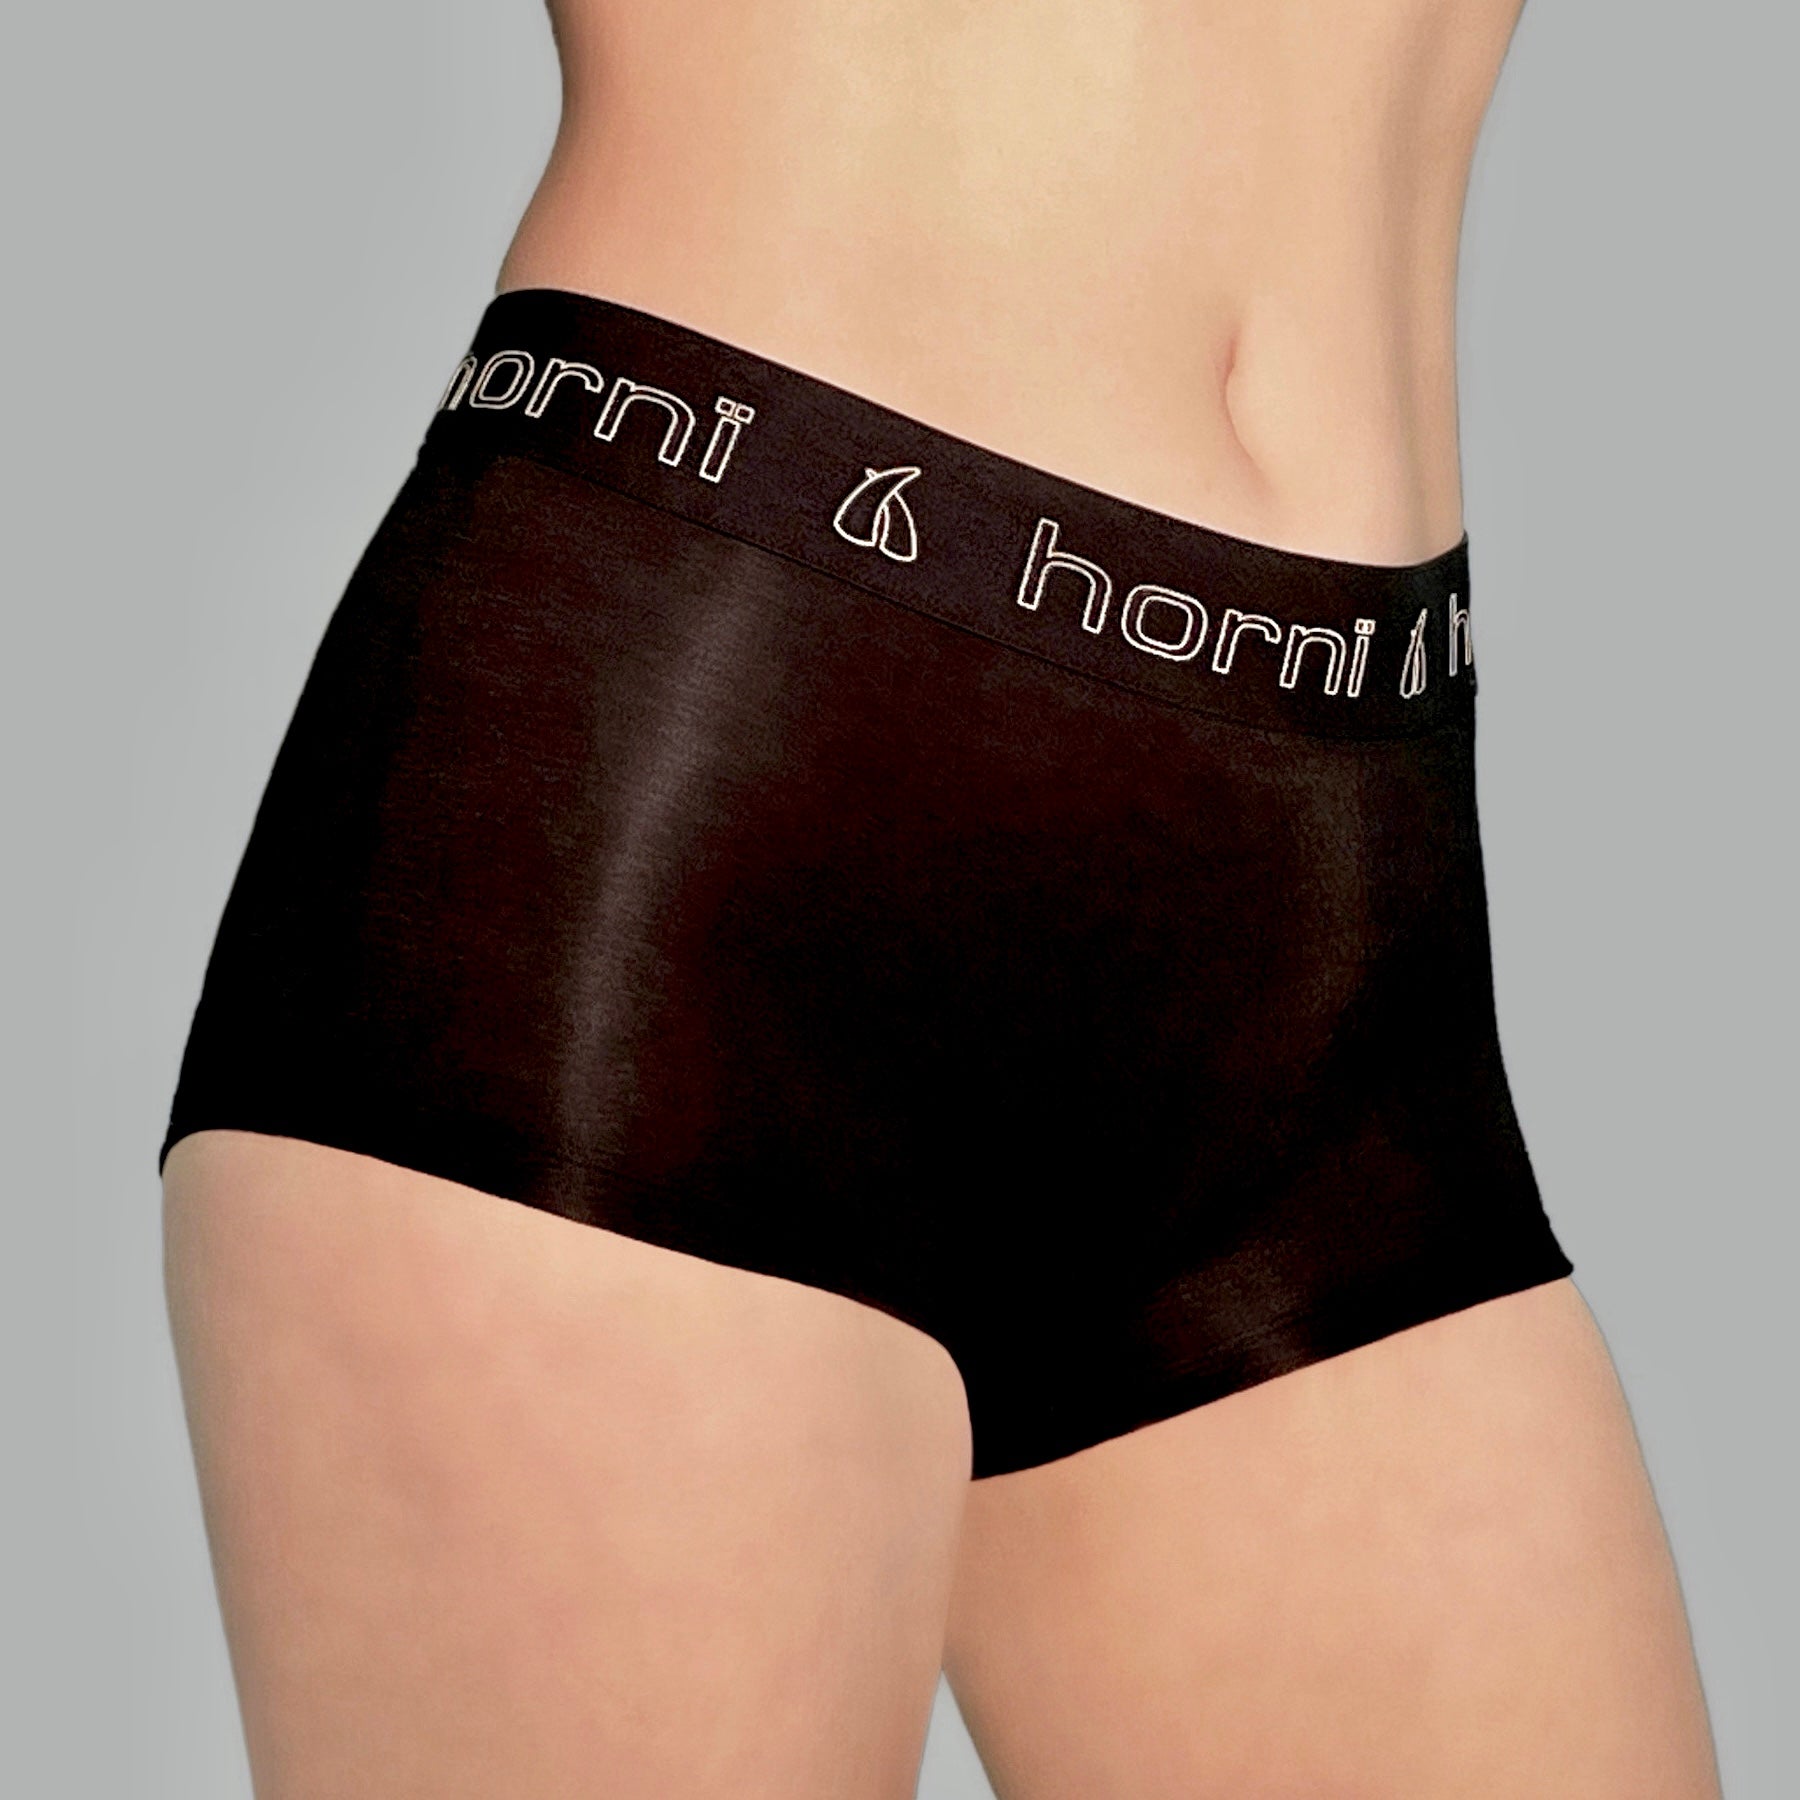 horni black panther boxer shorts women's – hornï underwear